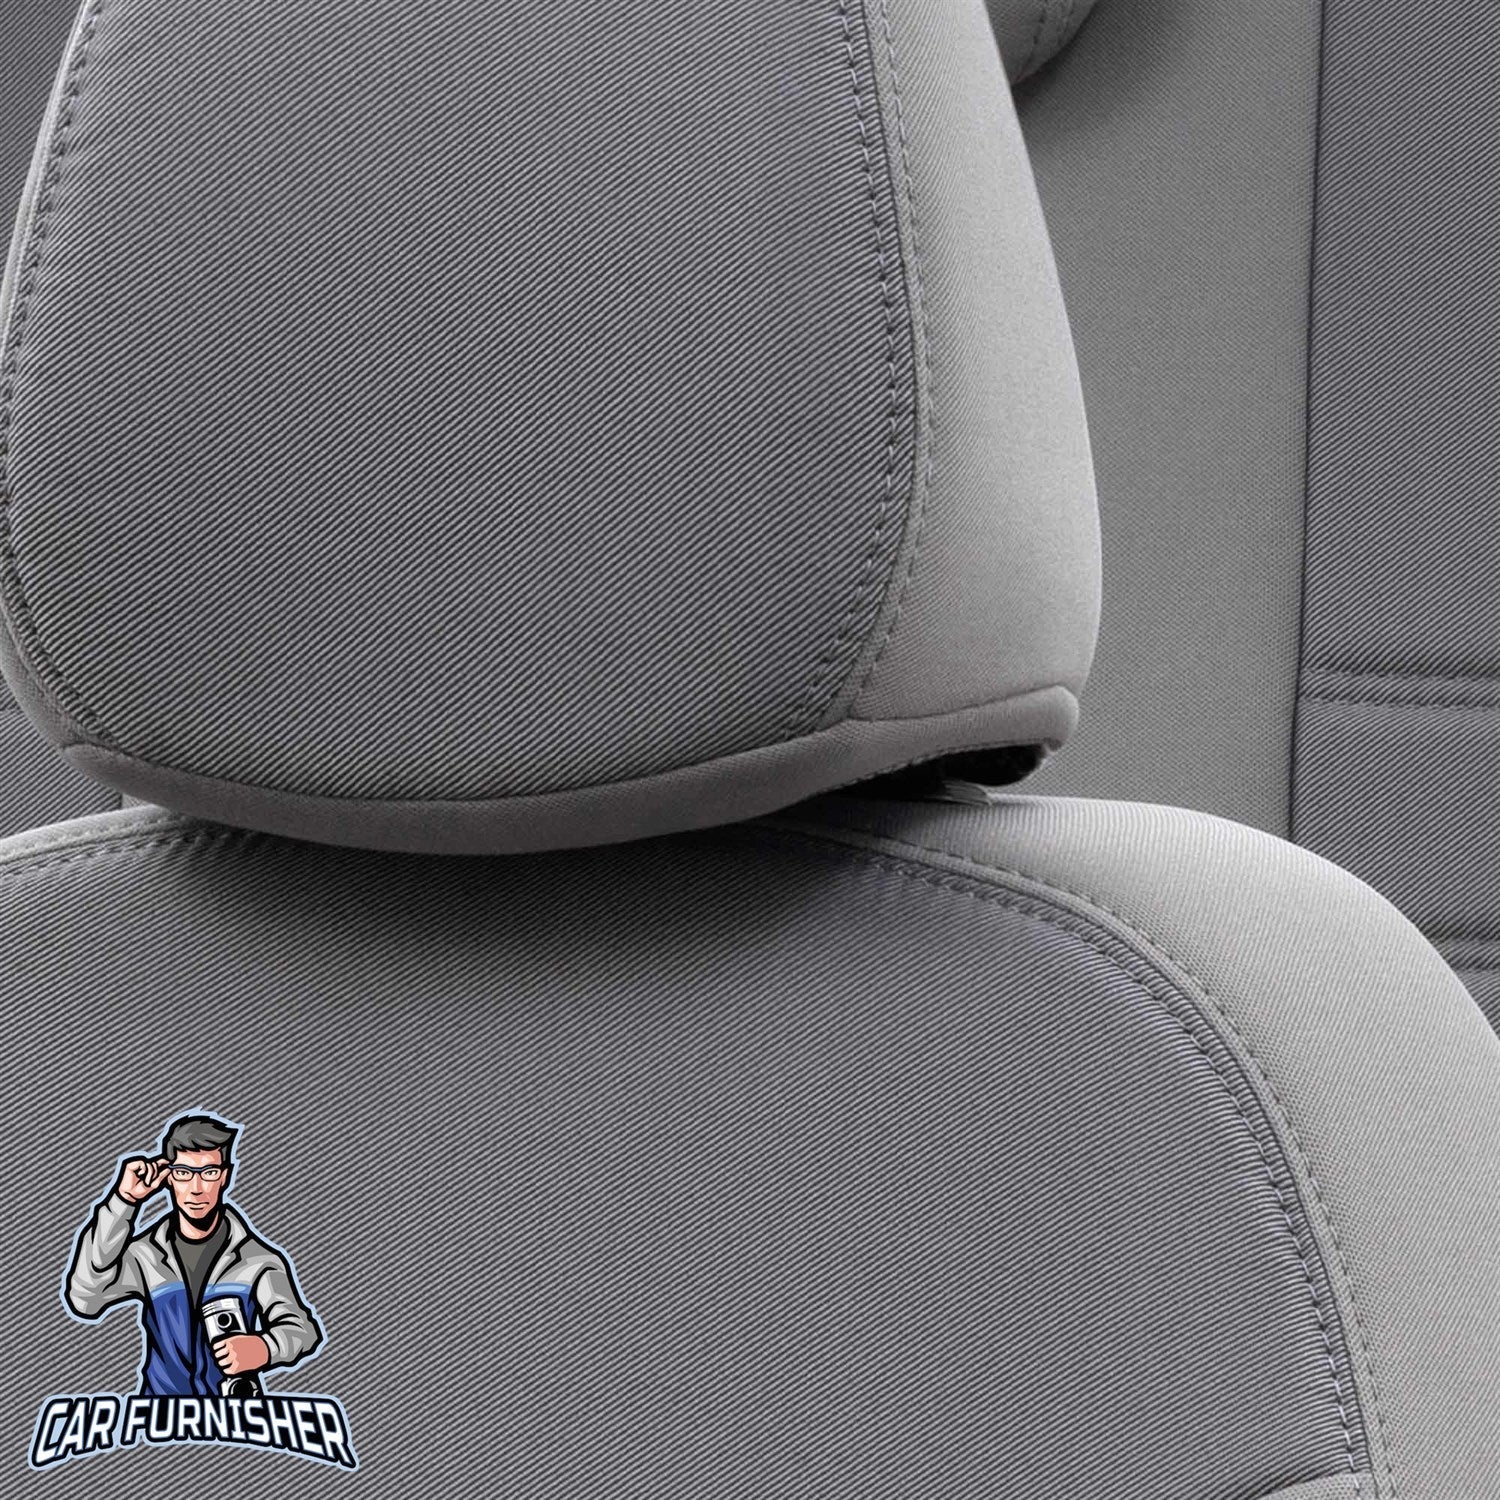 Suzuki Swift Seat Covers Original Jacquard Design Gray Jacquard Fabric